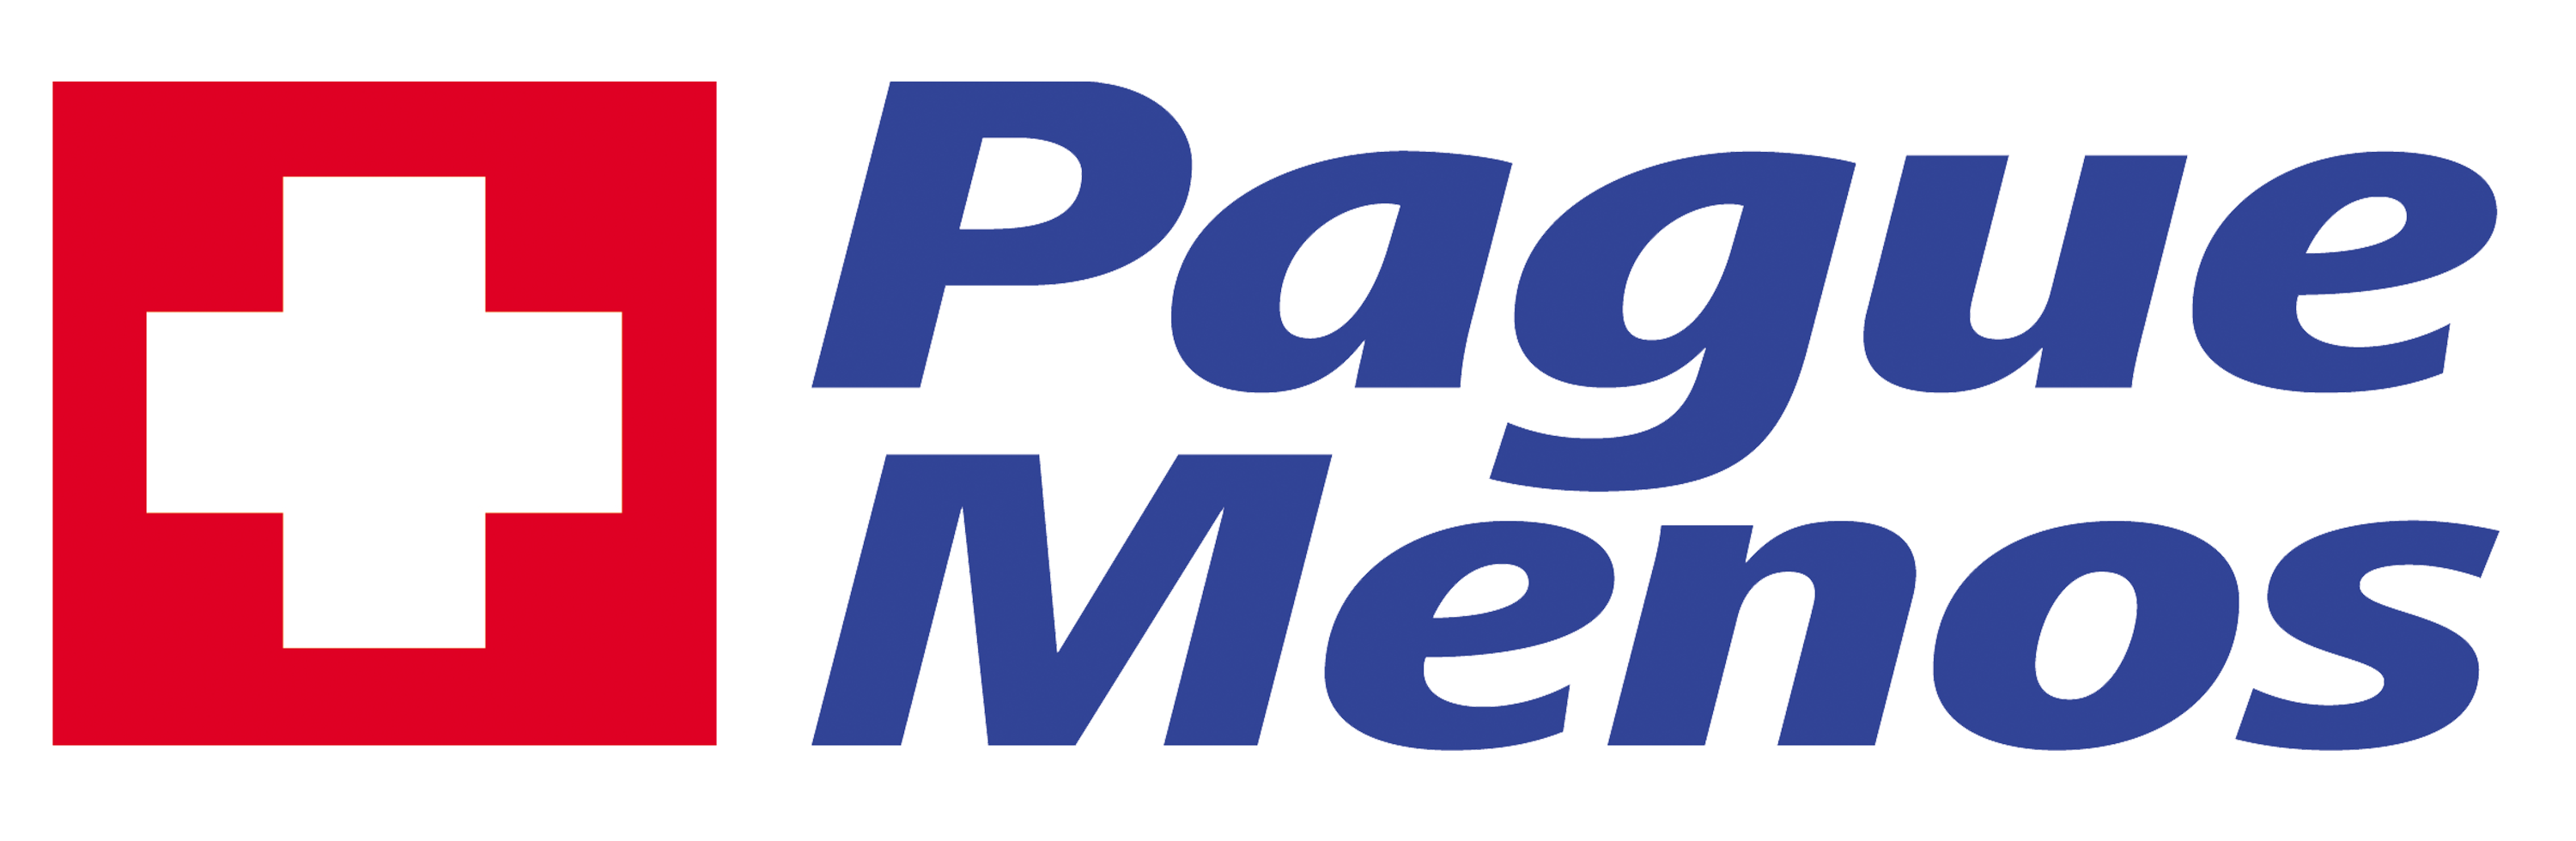 Farmacia Pague Menos - Serra - MG